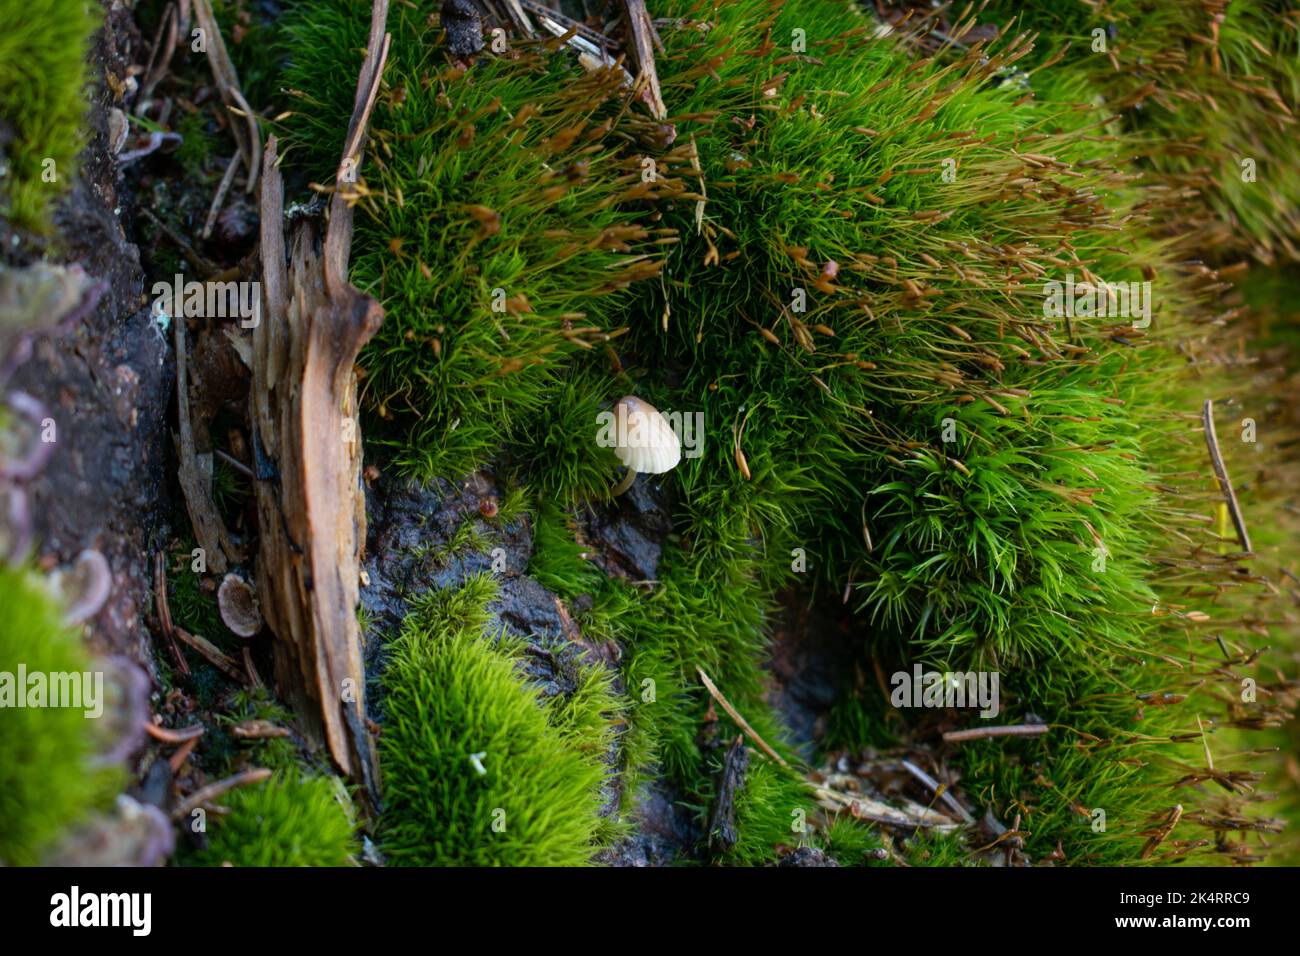 Tiny mushroom growing in the moss Stock Photo